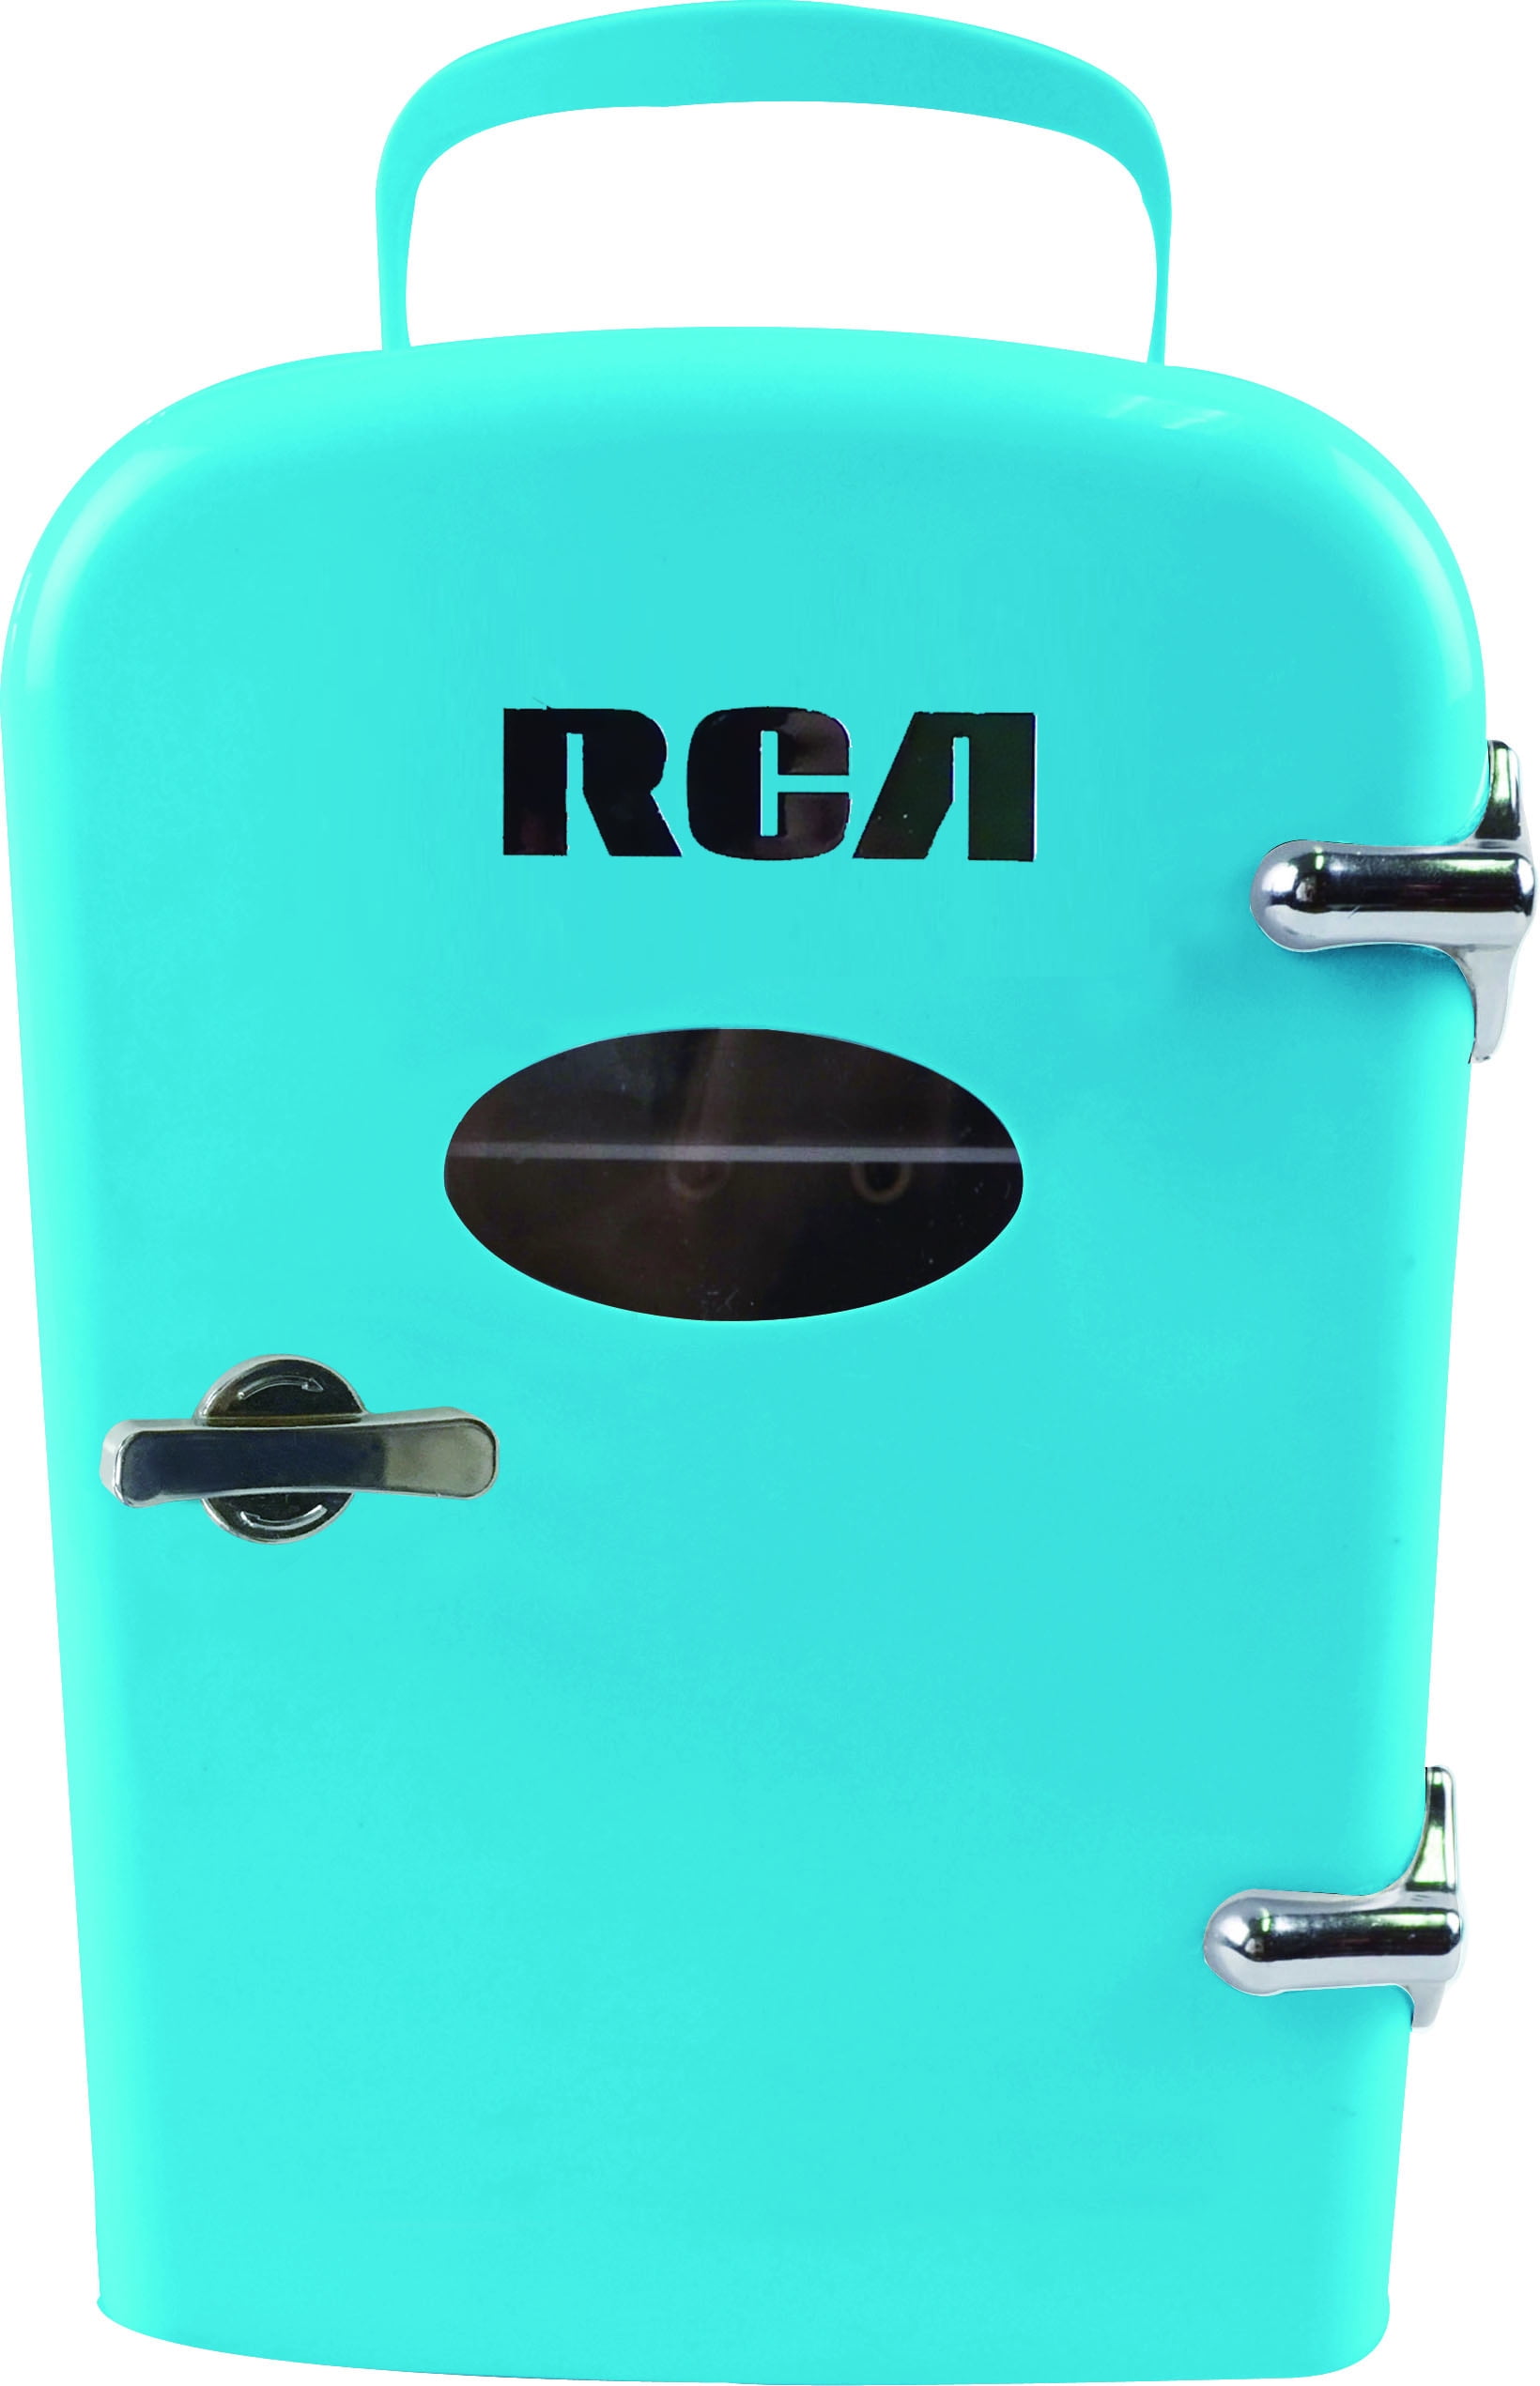 RCA RMIS129-MINT Mini Fridge, Mint